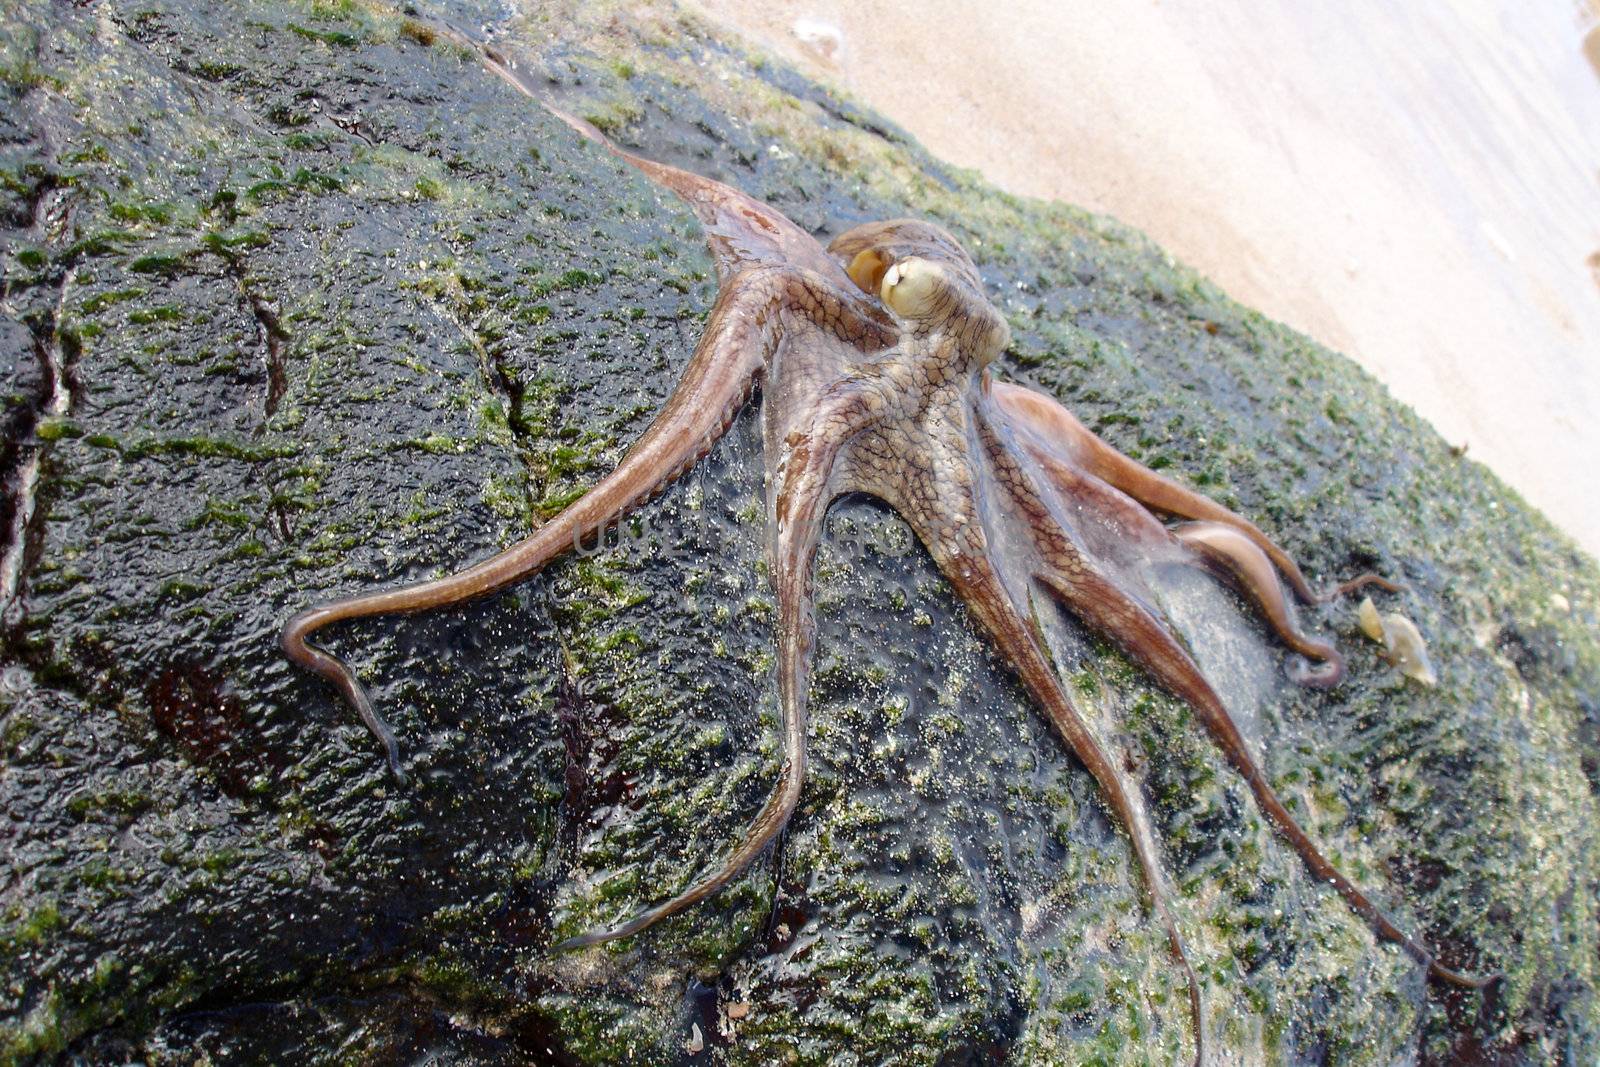 Octopus by Daniel_Wiedemann